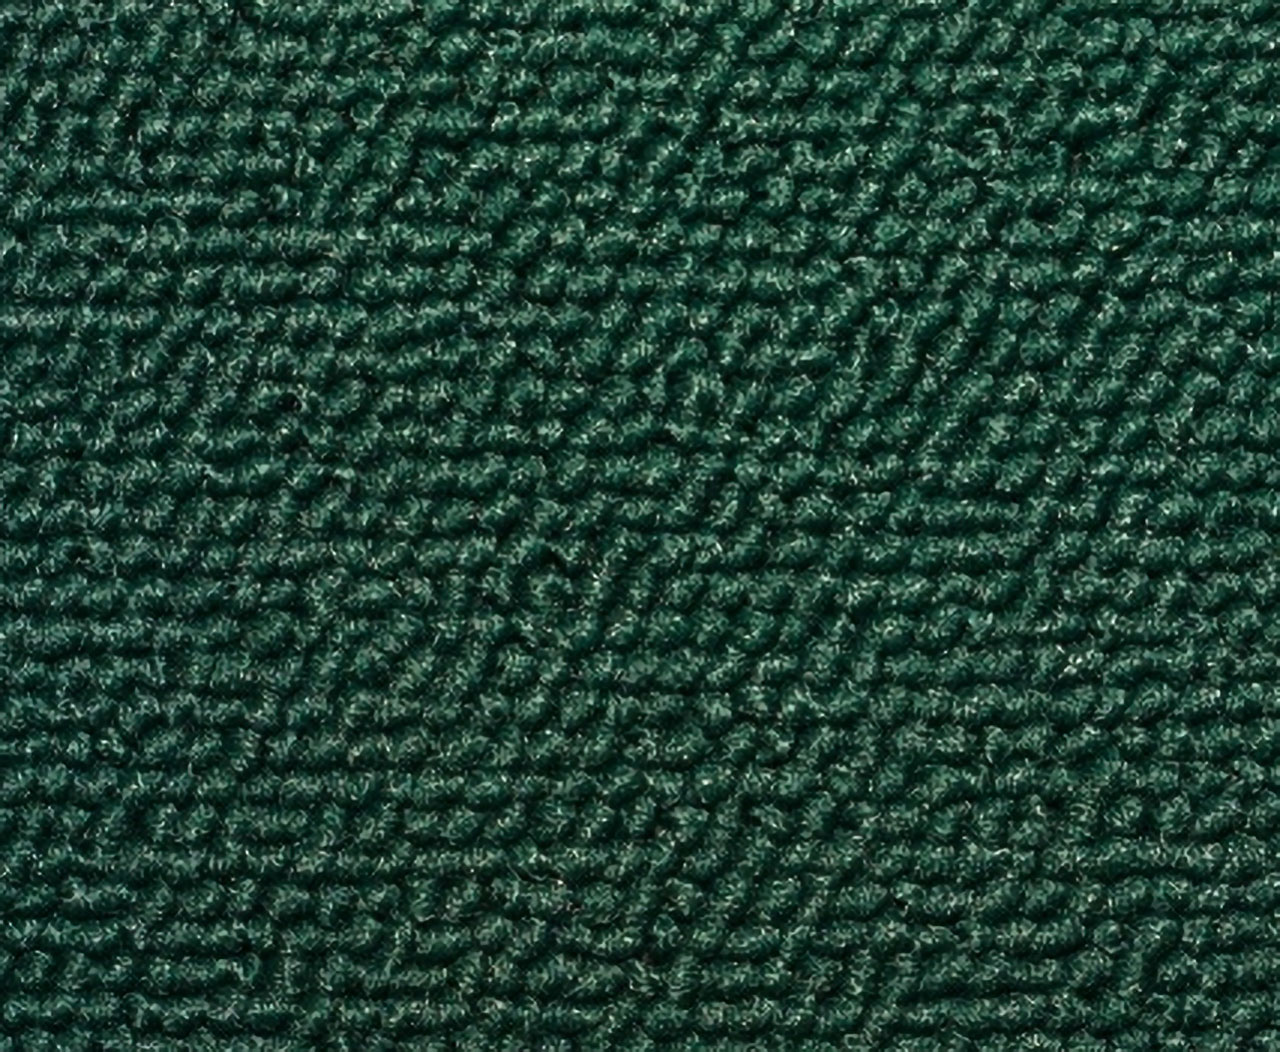 Holden Premier HT Premier Wagon 16R Isis Green Carpet (Image 1 of 1)